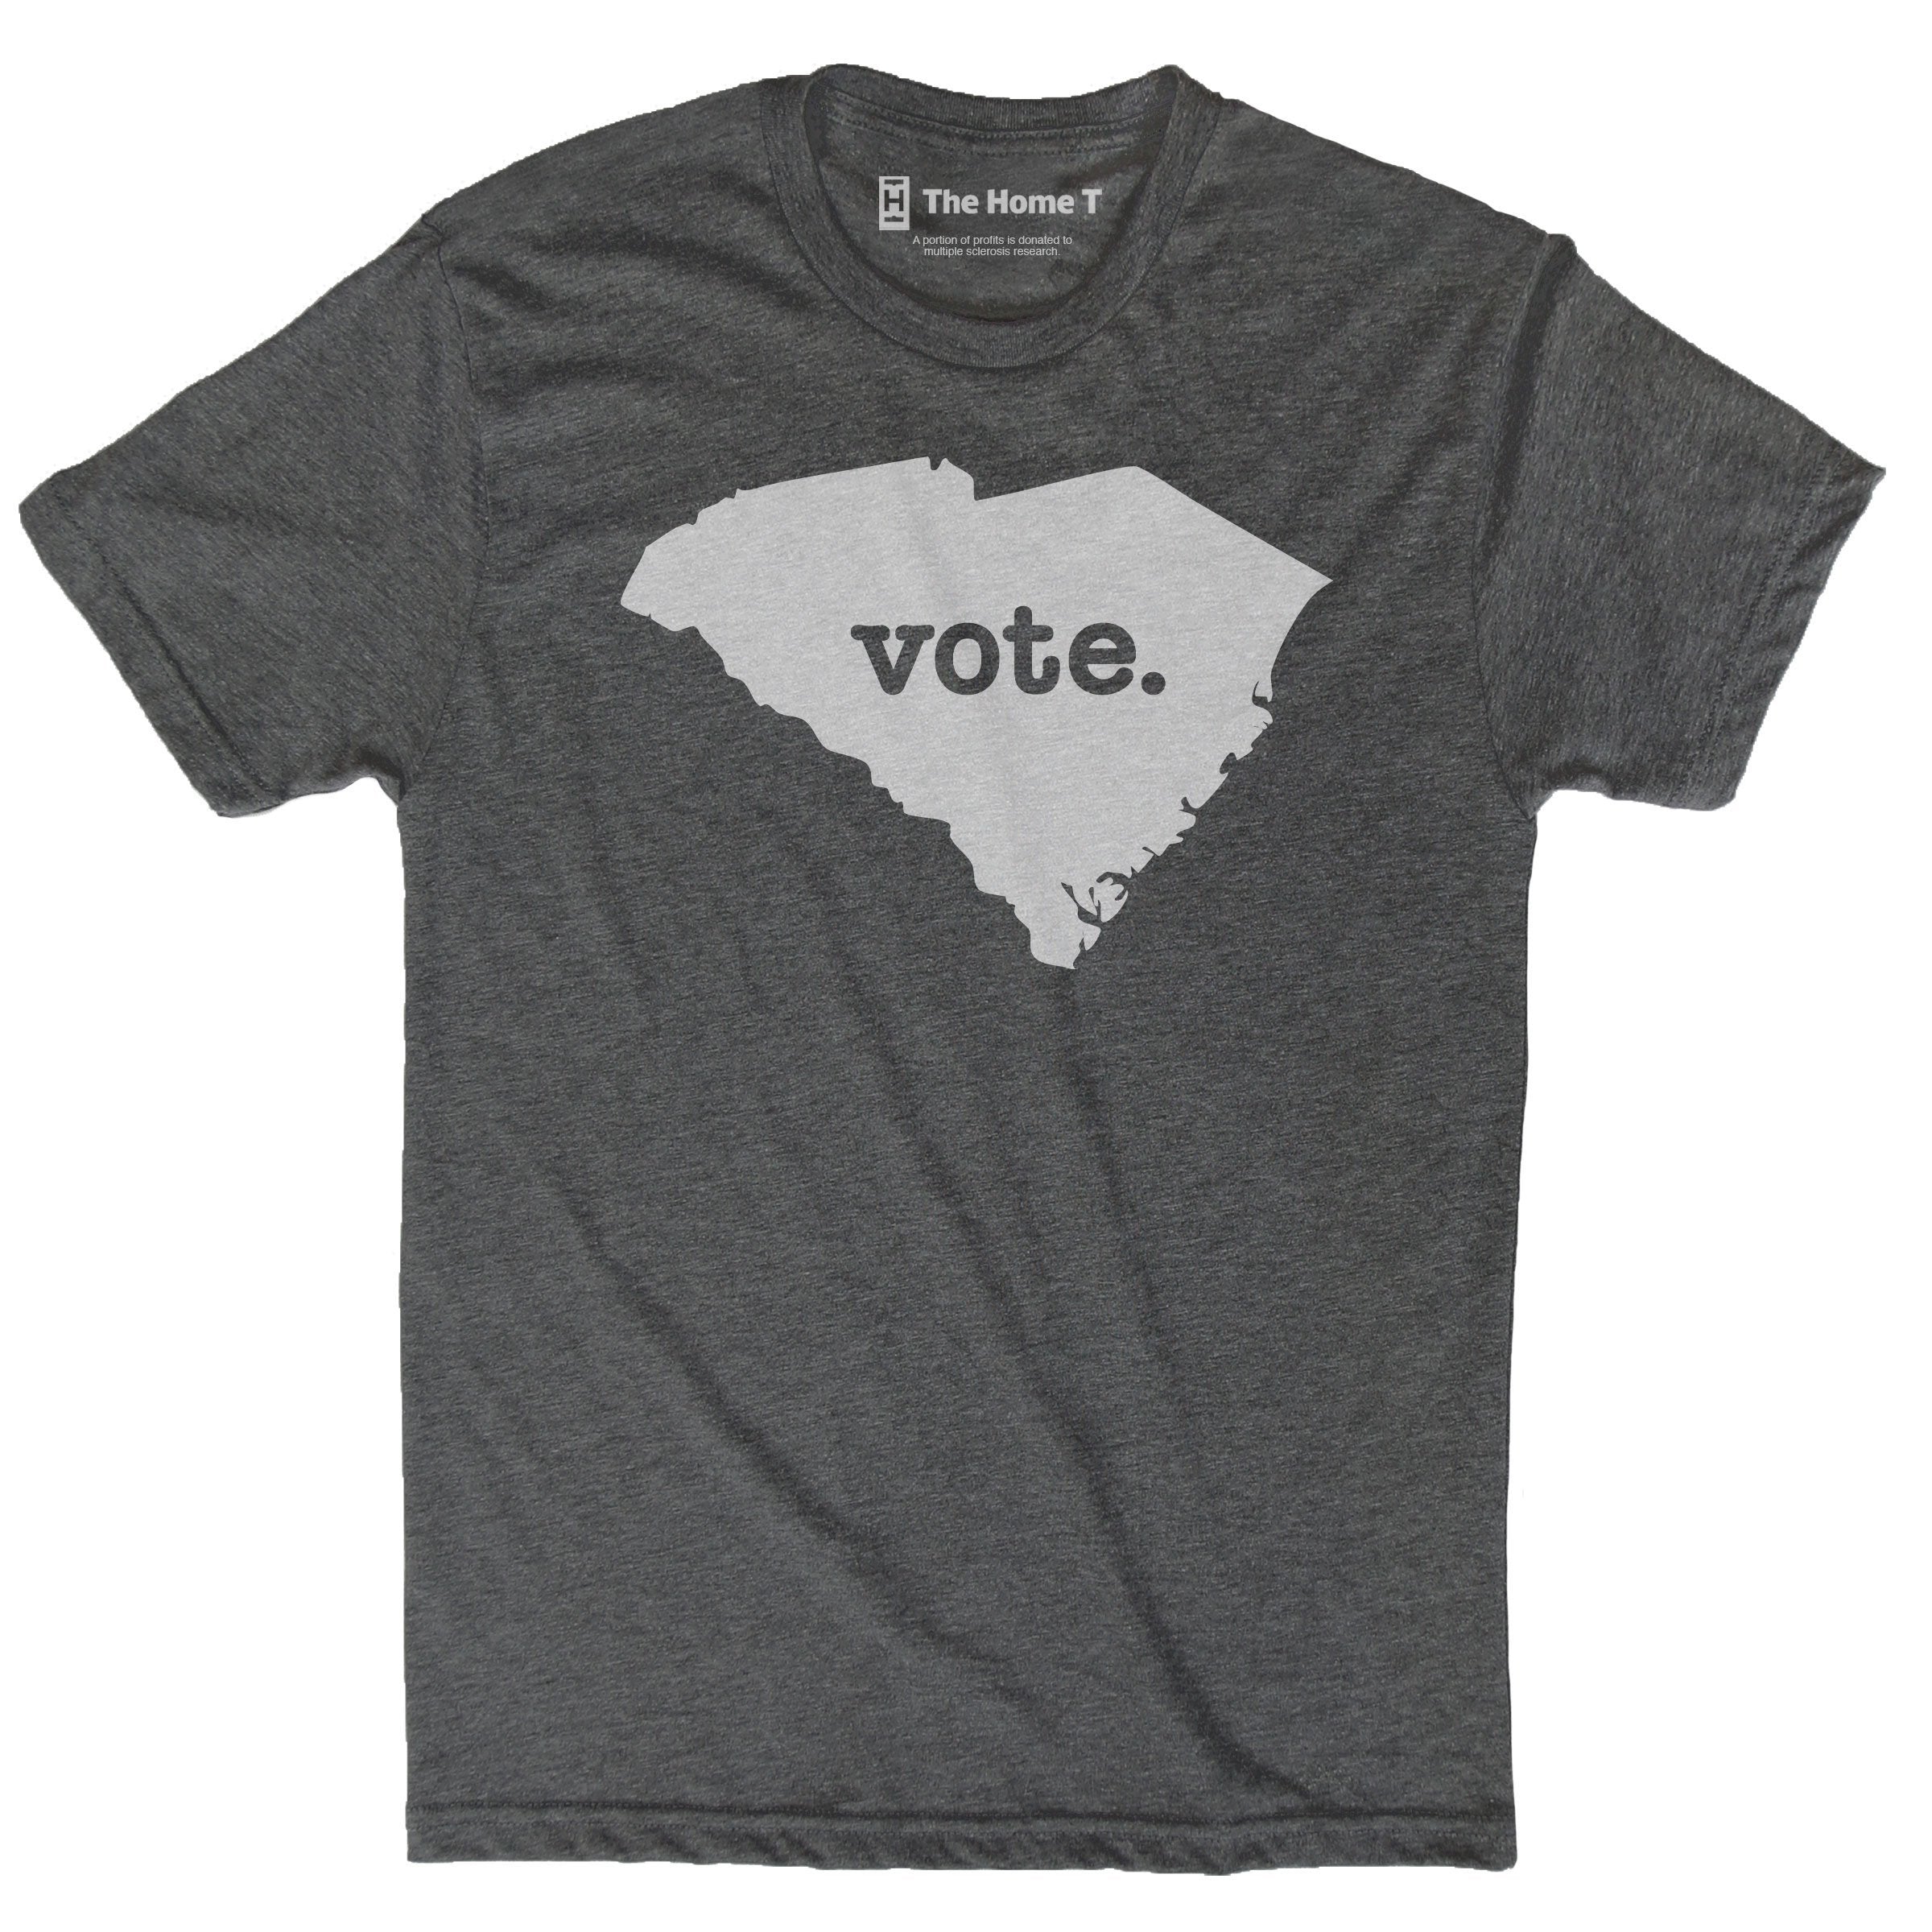 South Carolina Vote Home T Vote The Home T XS Grey